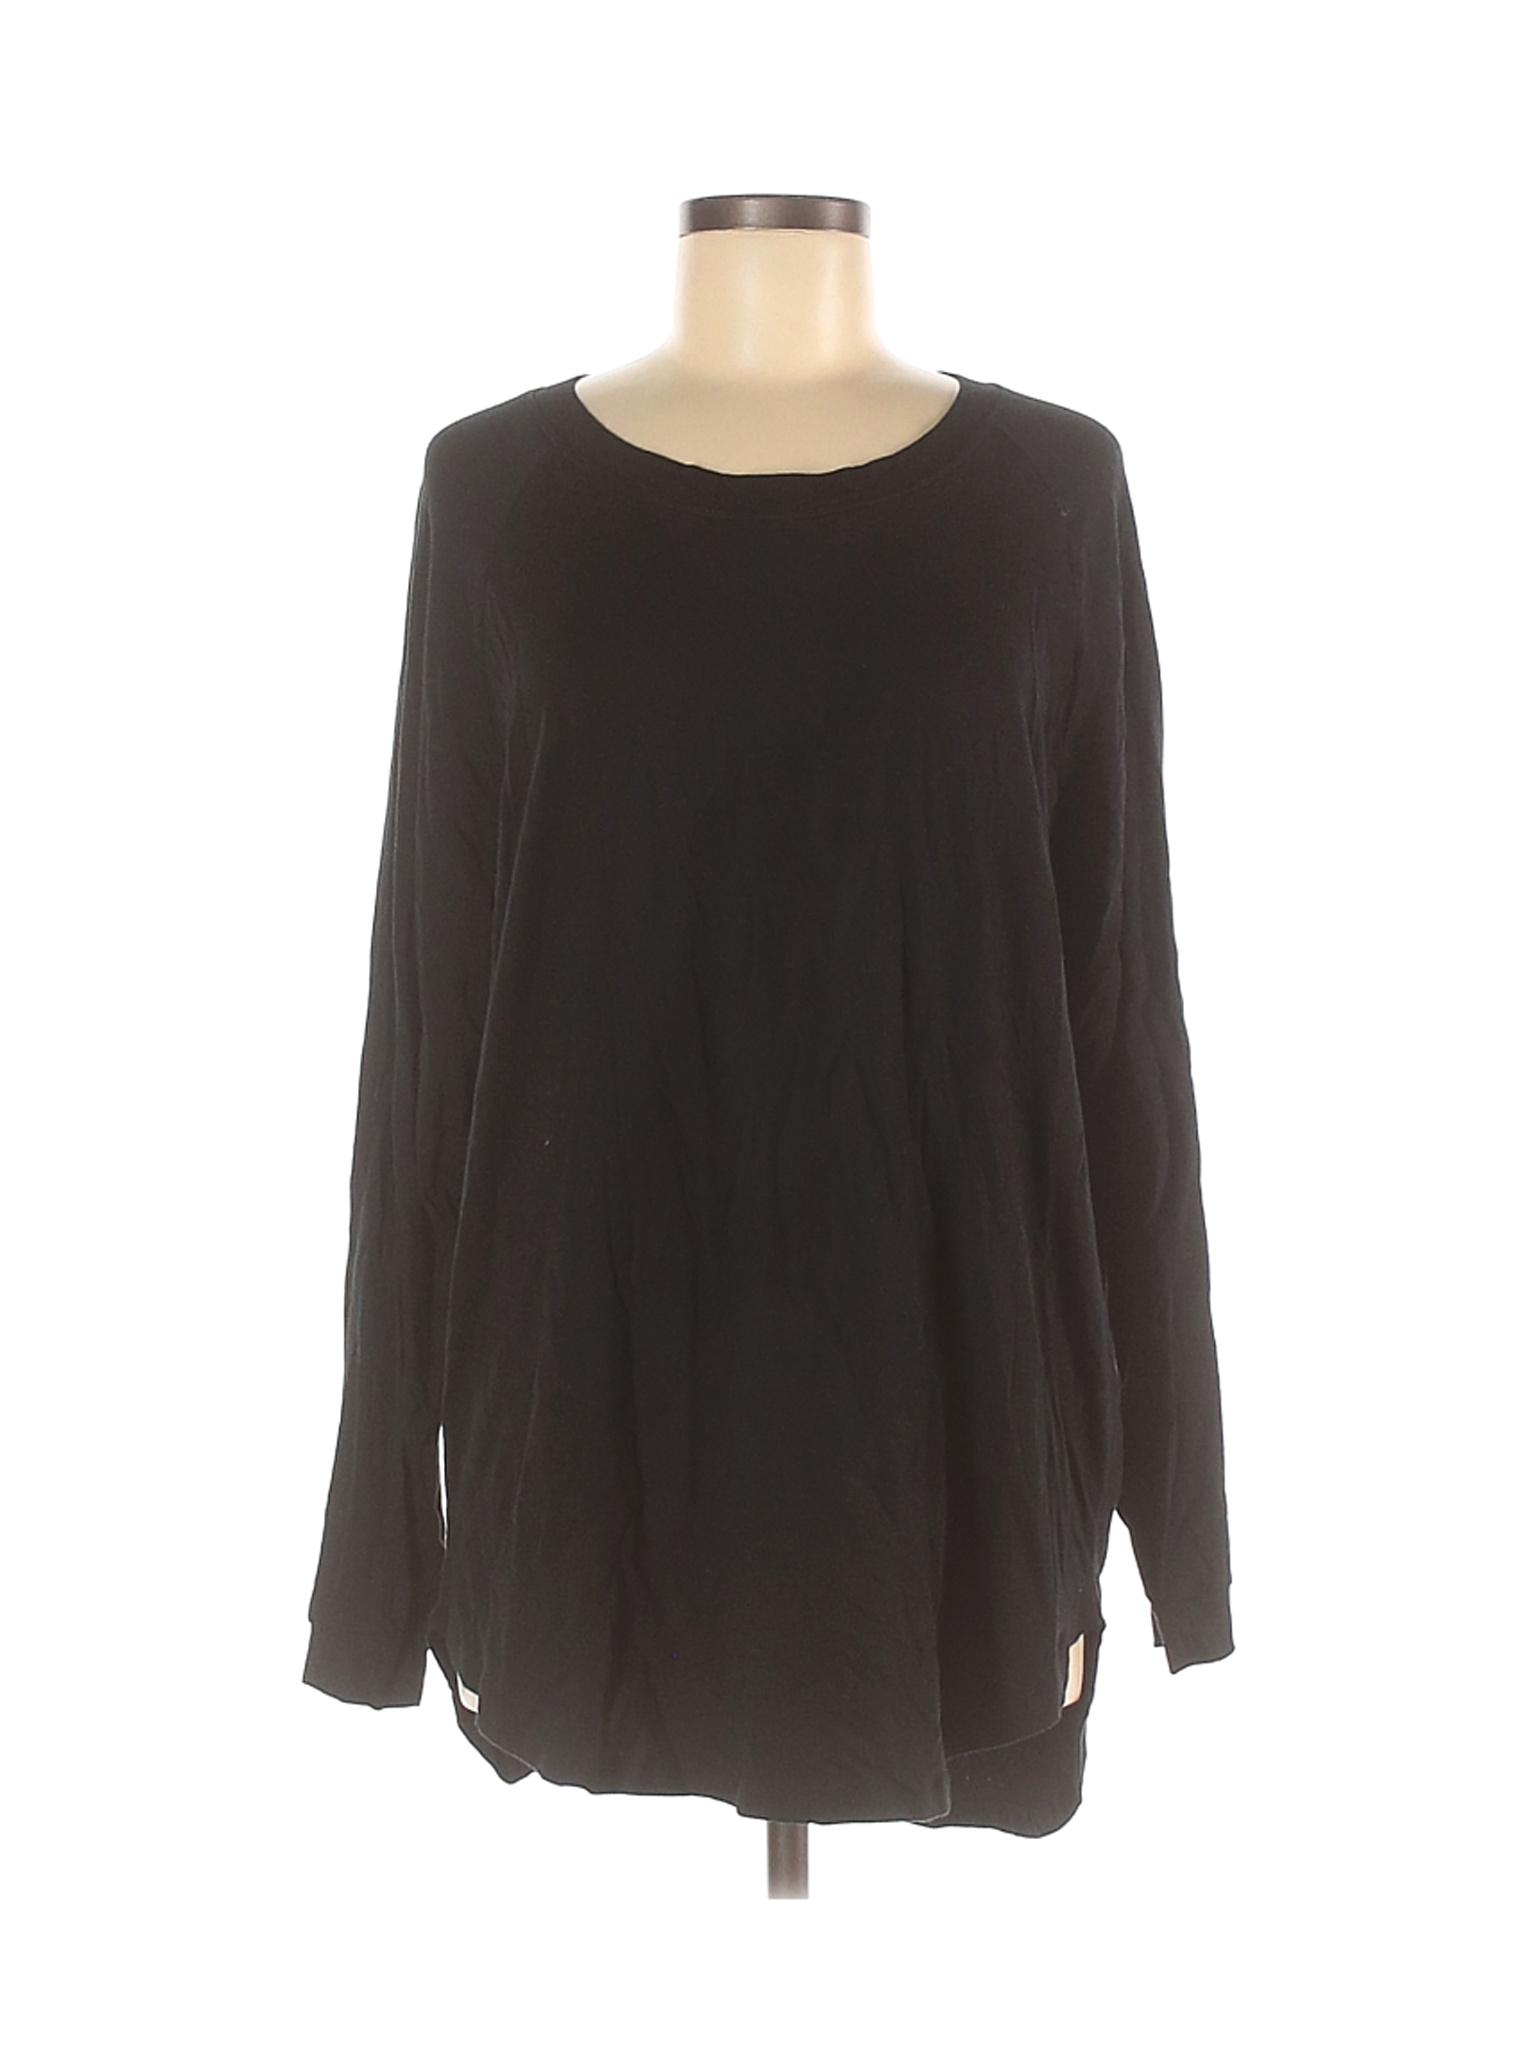 Shopthemint.com Women Black Long Sleeve T-Shirt M | eBay